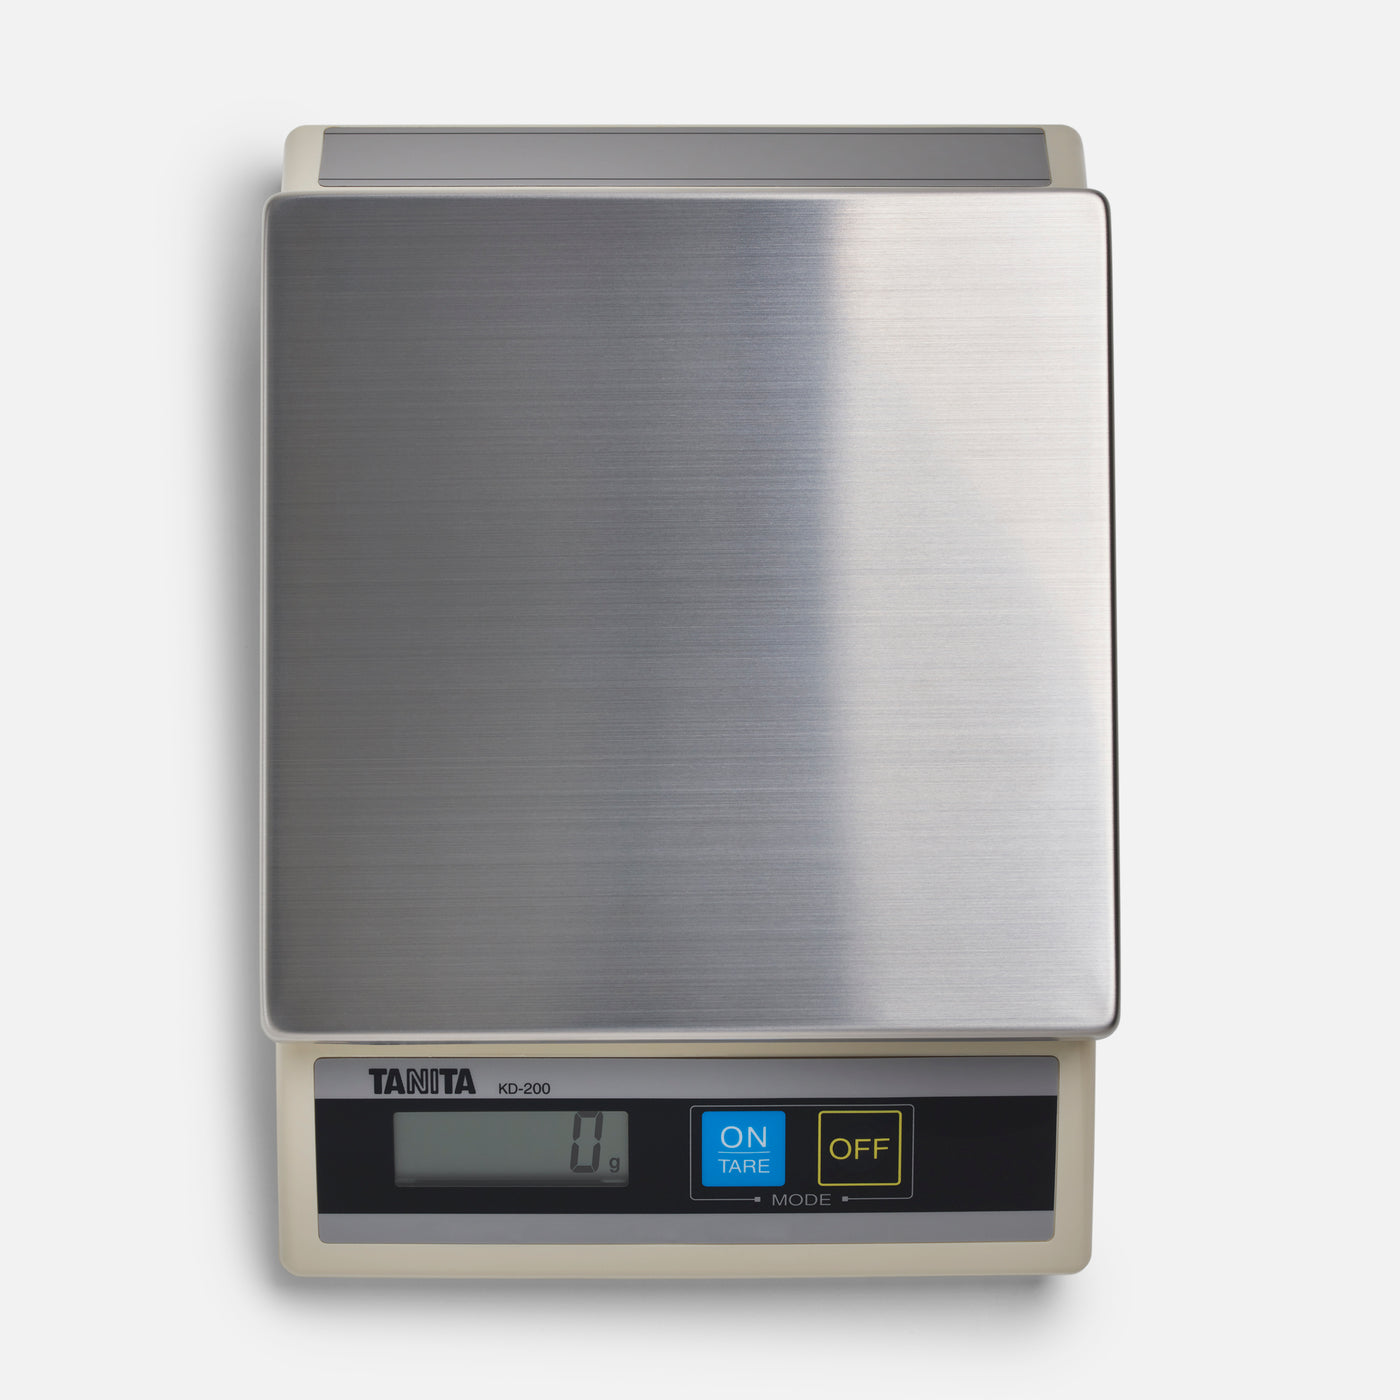 KD-200-110 Digital Kitchen Scale